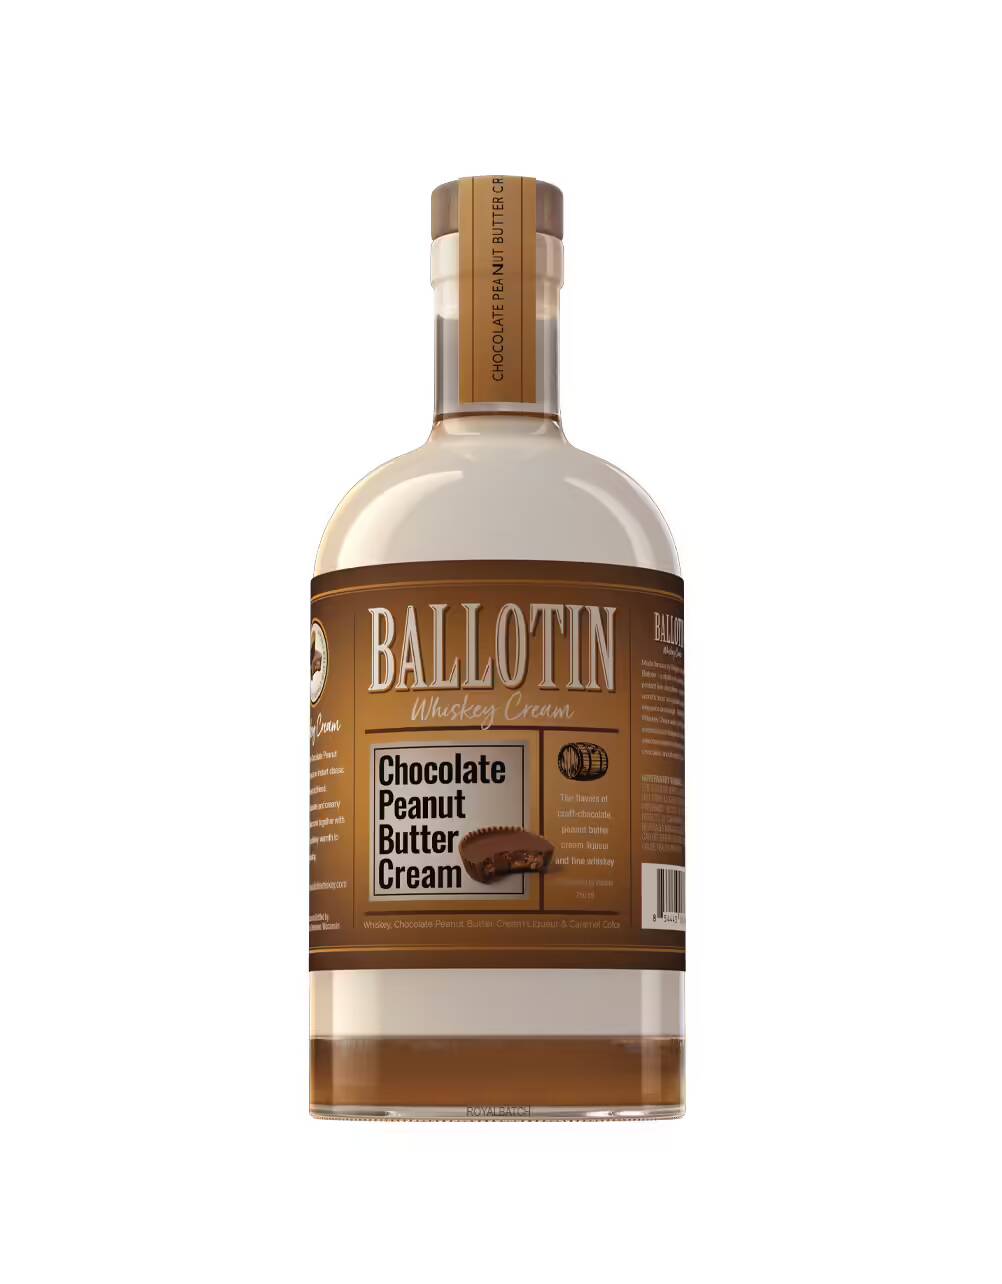 Ballotin Chocolate Peanut Butter Cream Flavored Whiskey